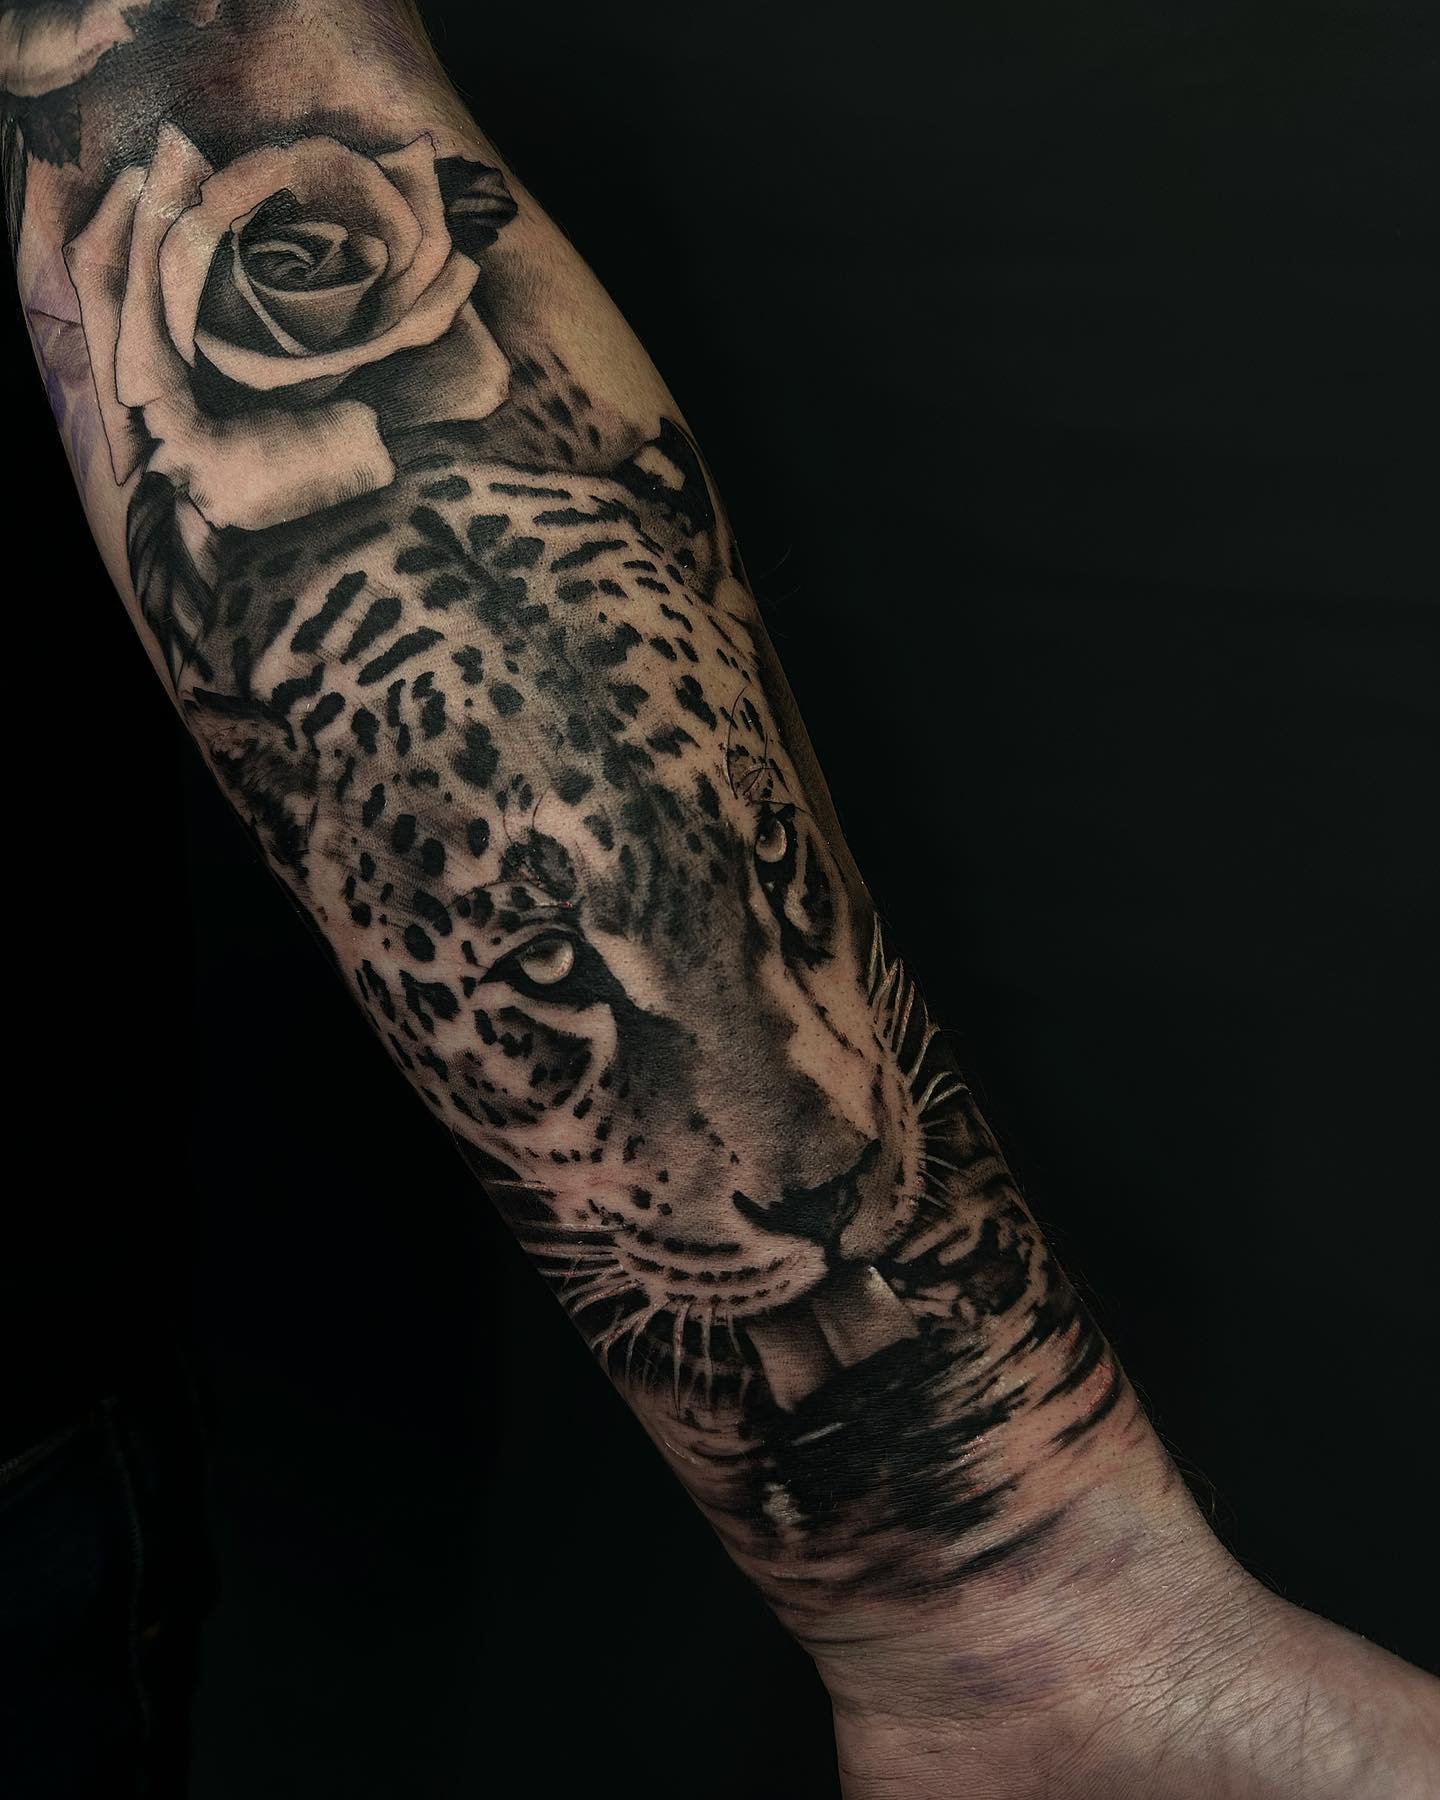 Jaguar drinking piece I added to @ryan.wallace.988 sleeve 👍
.
.
.
.
.
.
.
.
.
.
#jaguar #realisim #realismtattoo #tattoo